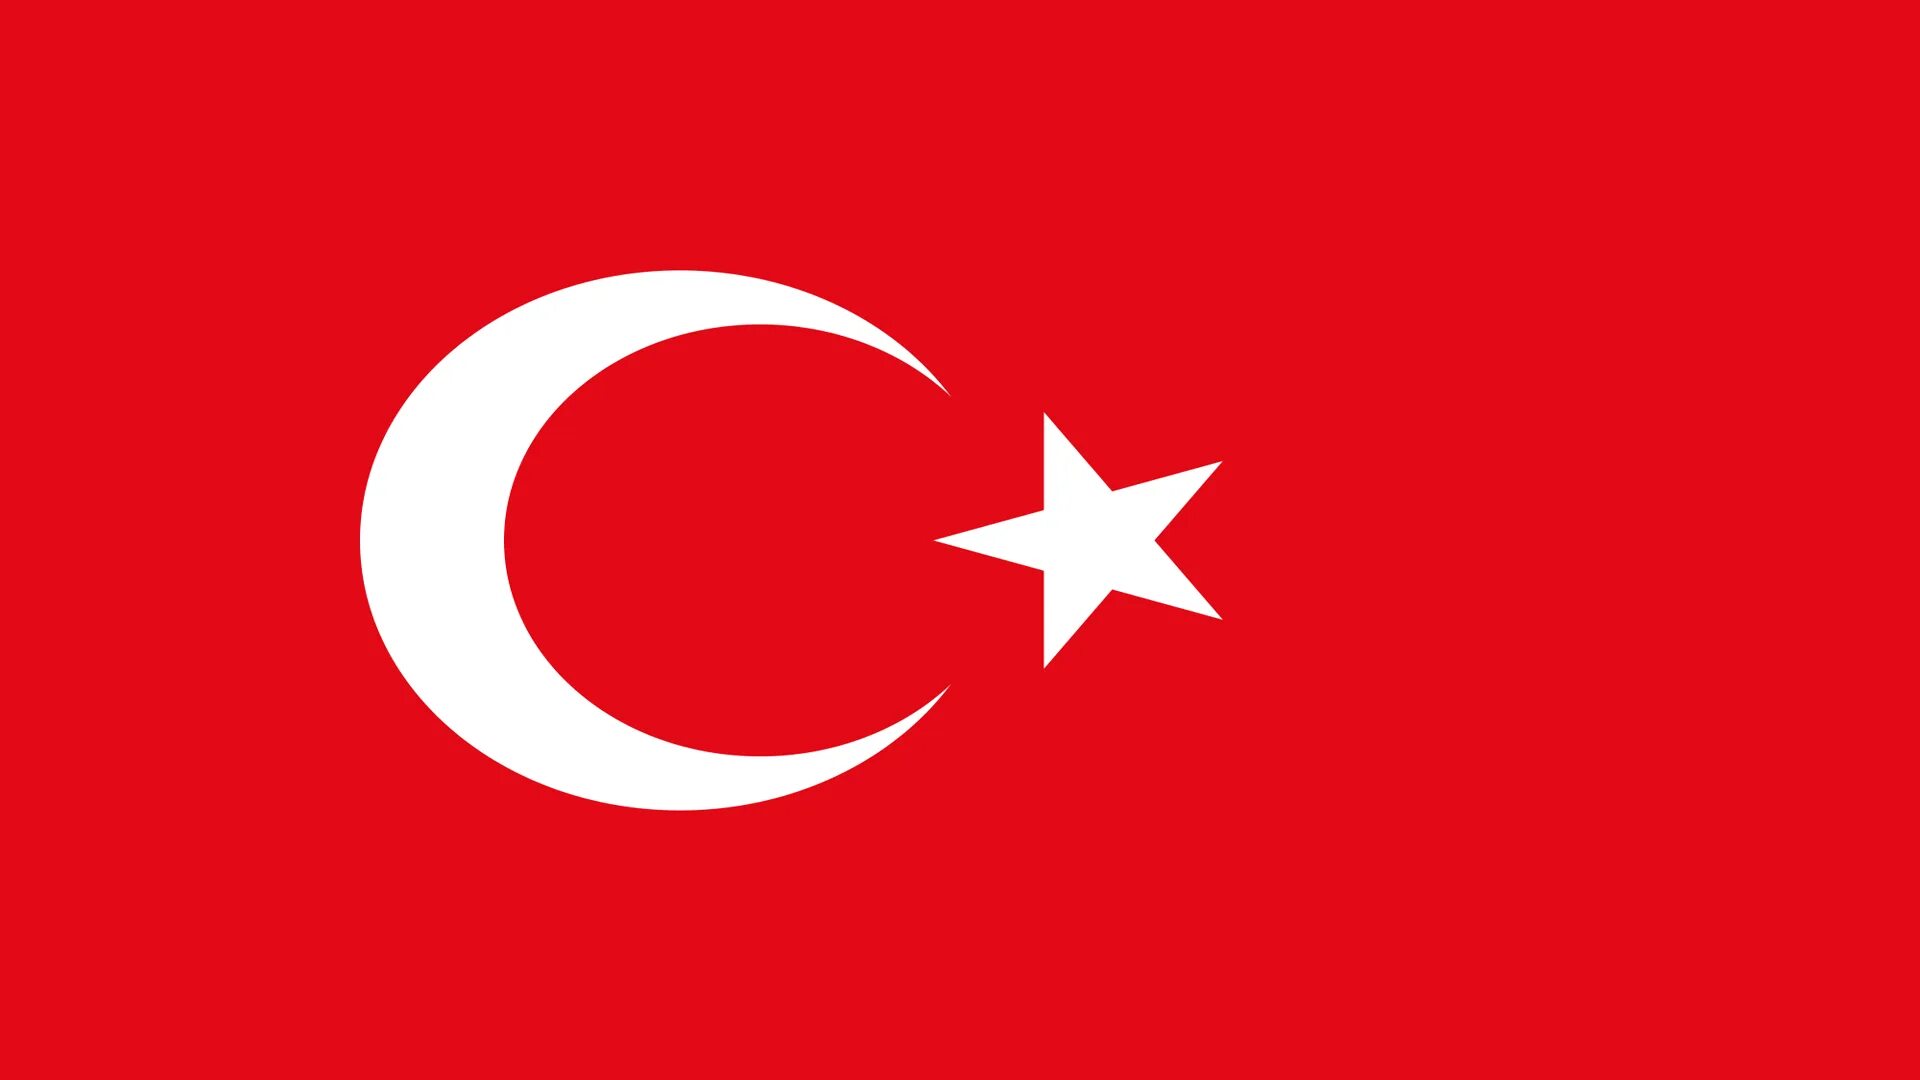 Түркия флаг. Турецкий флаг. Флаг тунеции. Флаг nehrbb. Сколько звезд на флаге турции